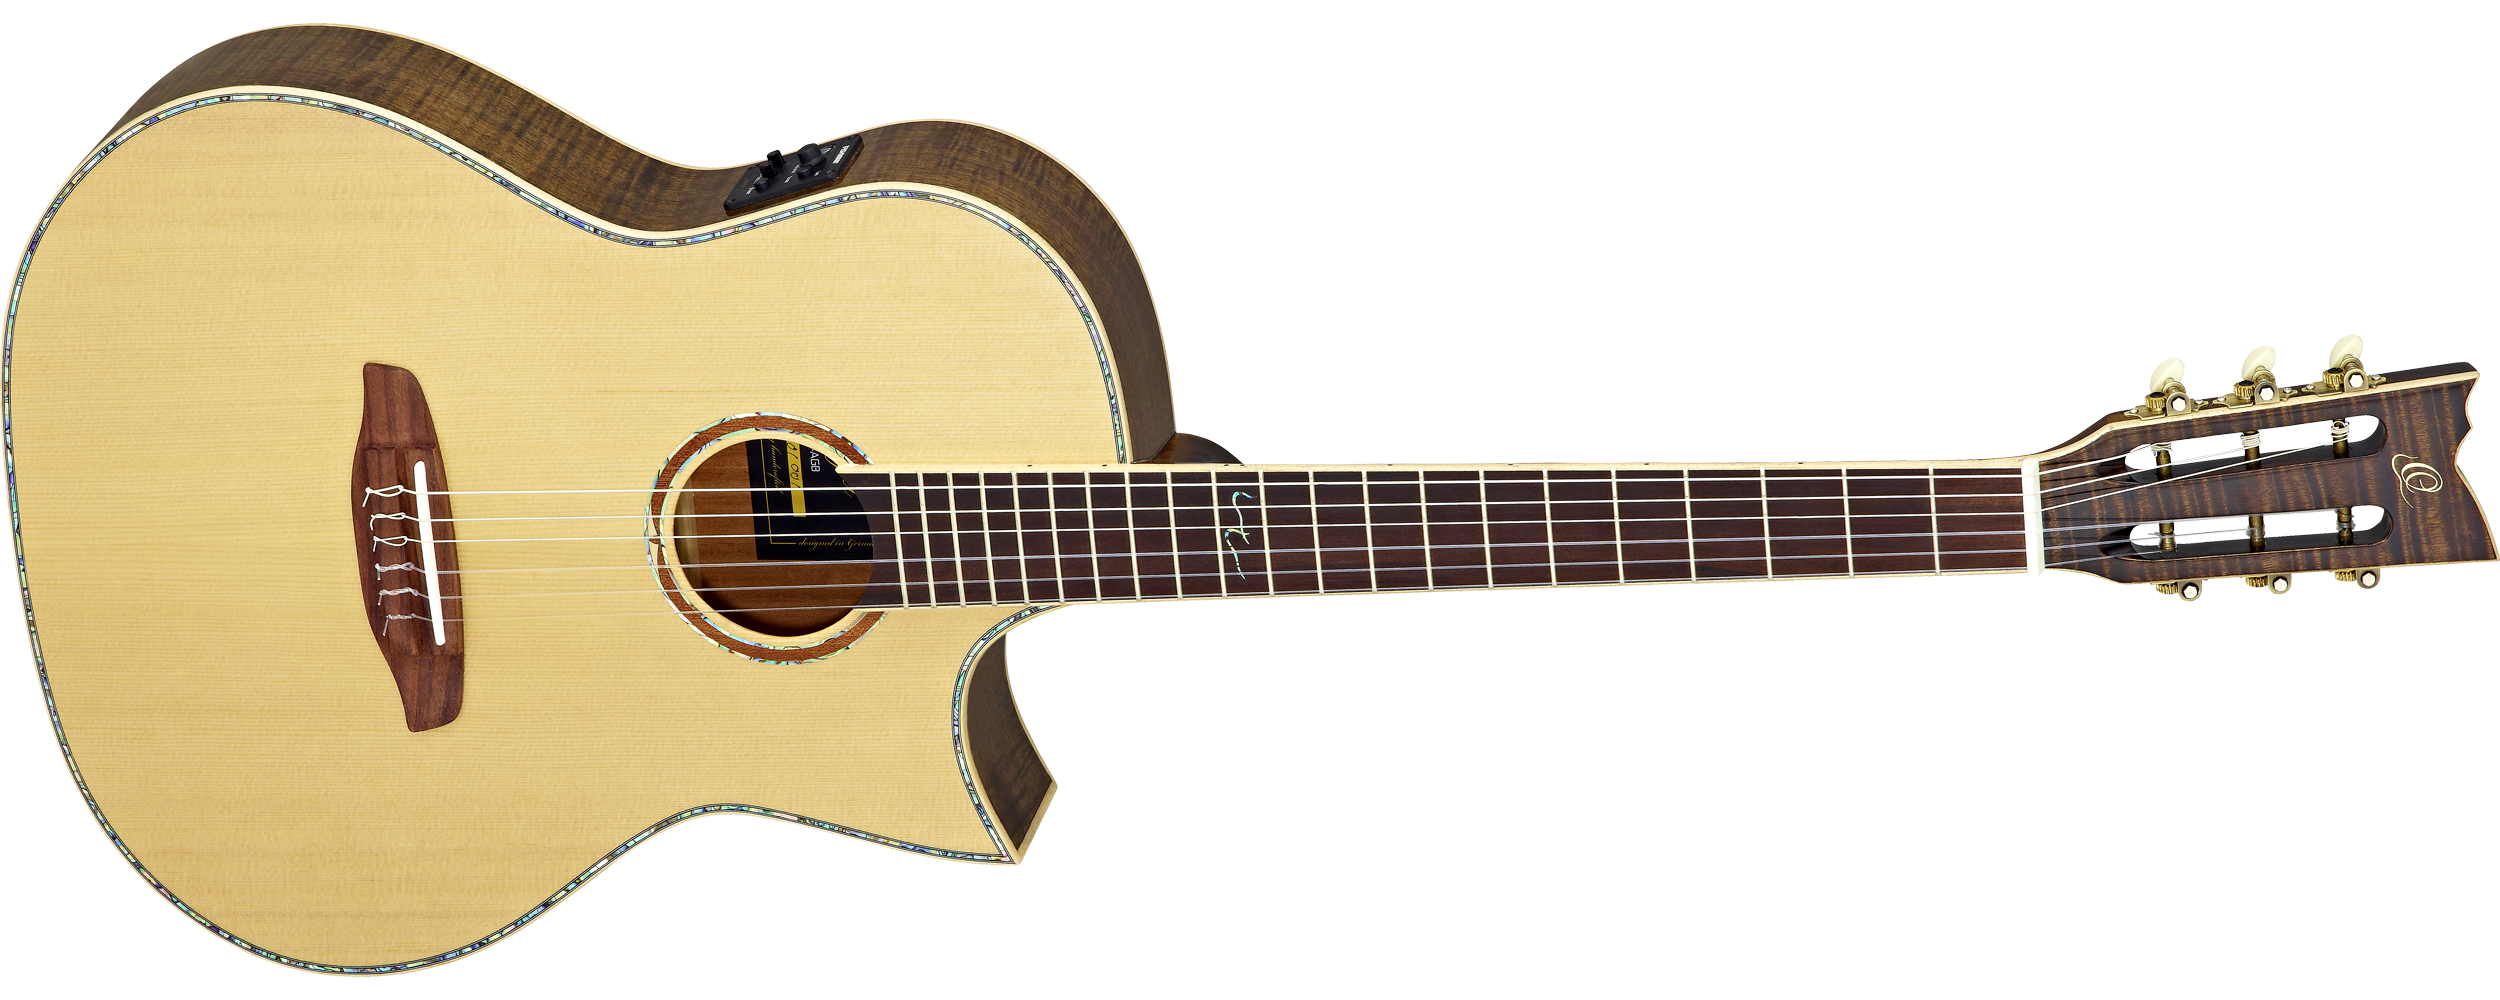 clipart guitar 60 guitar